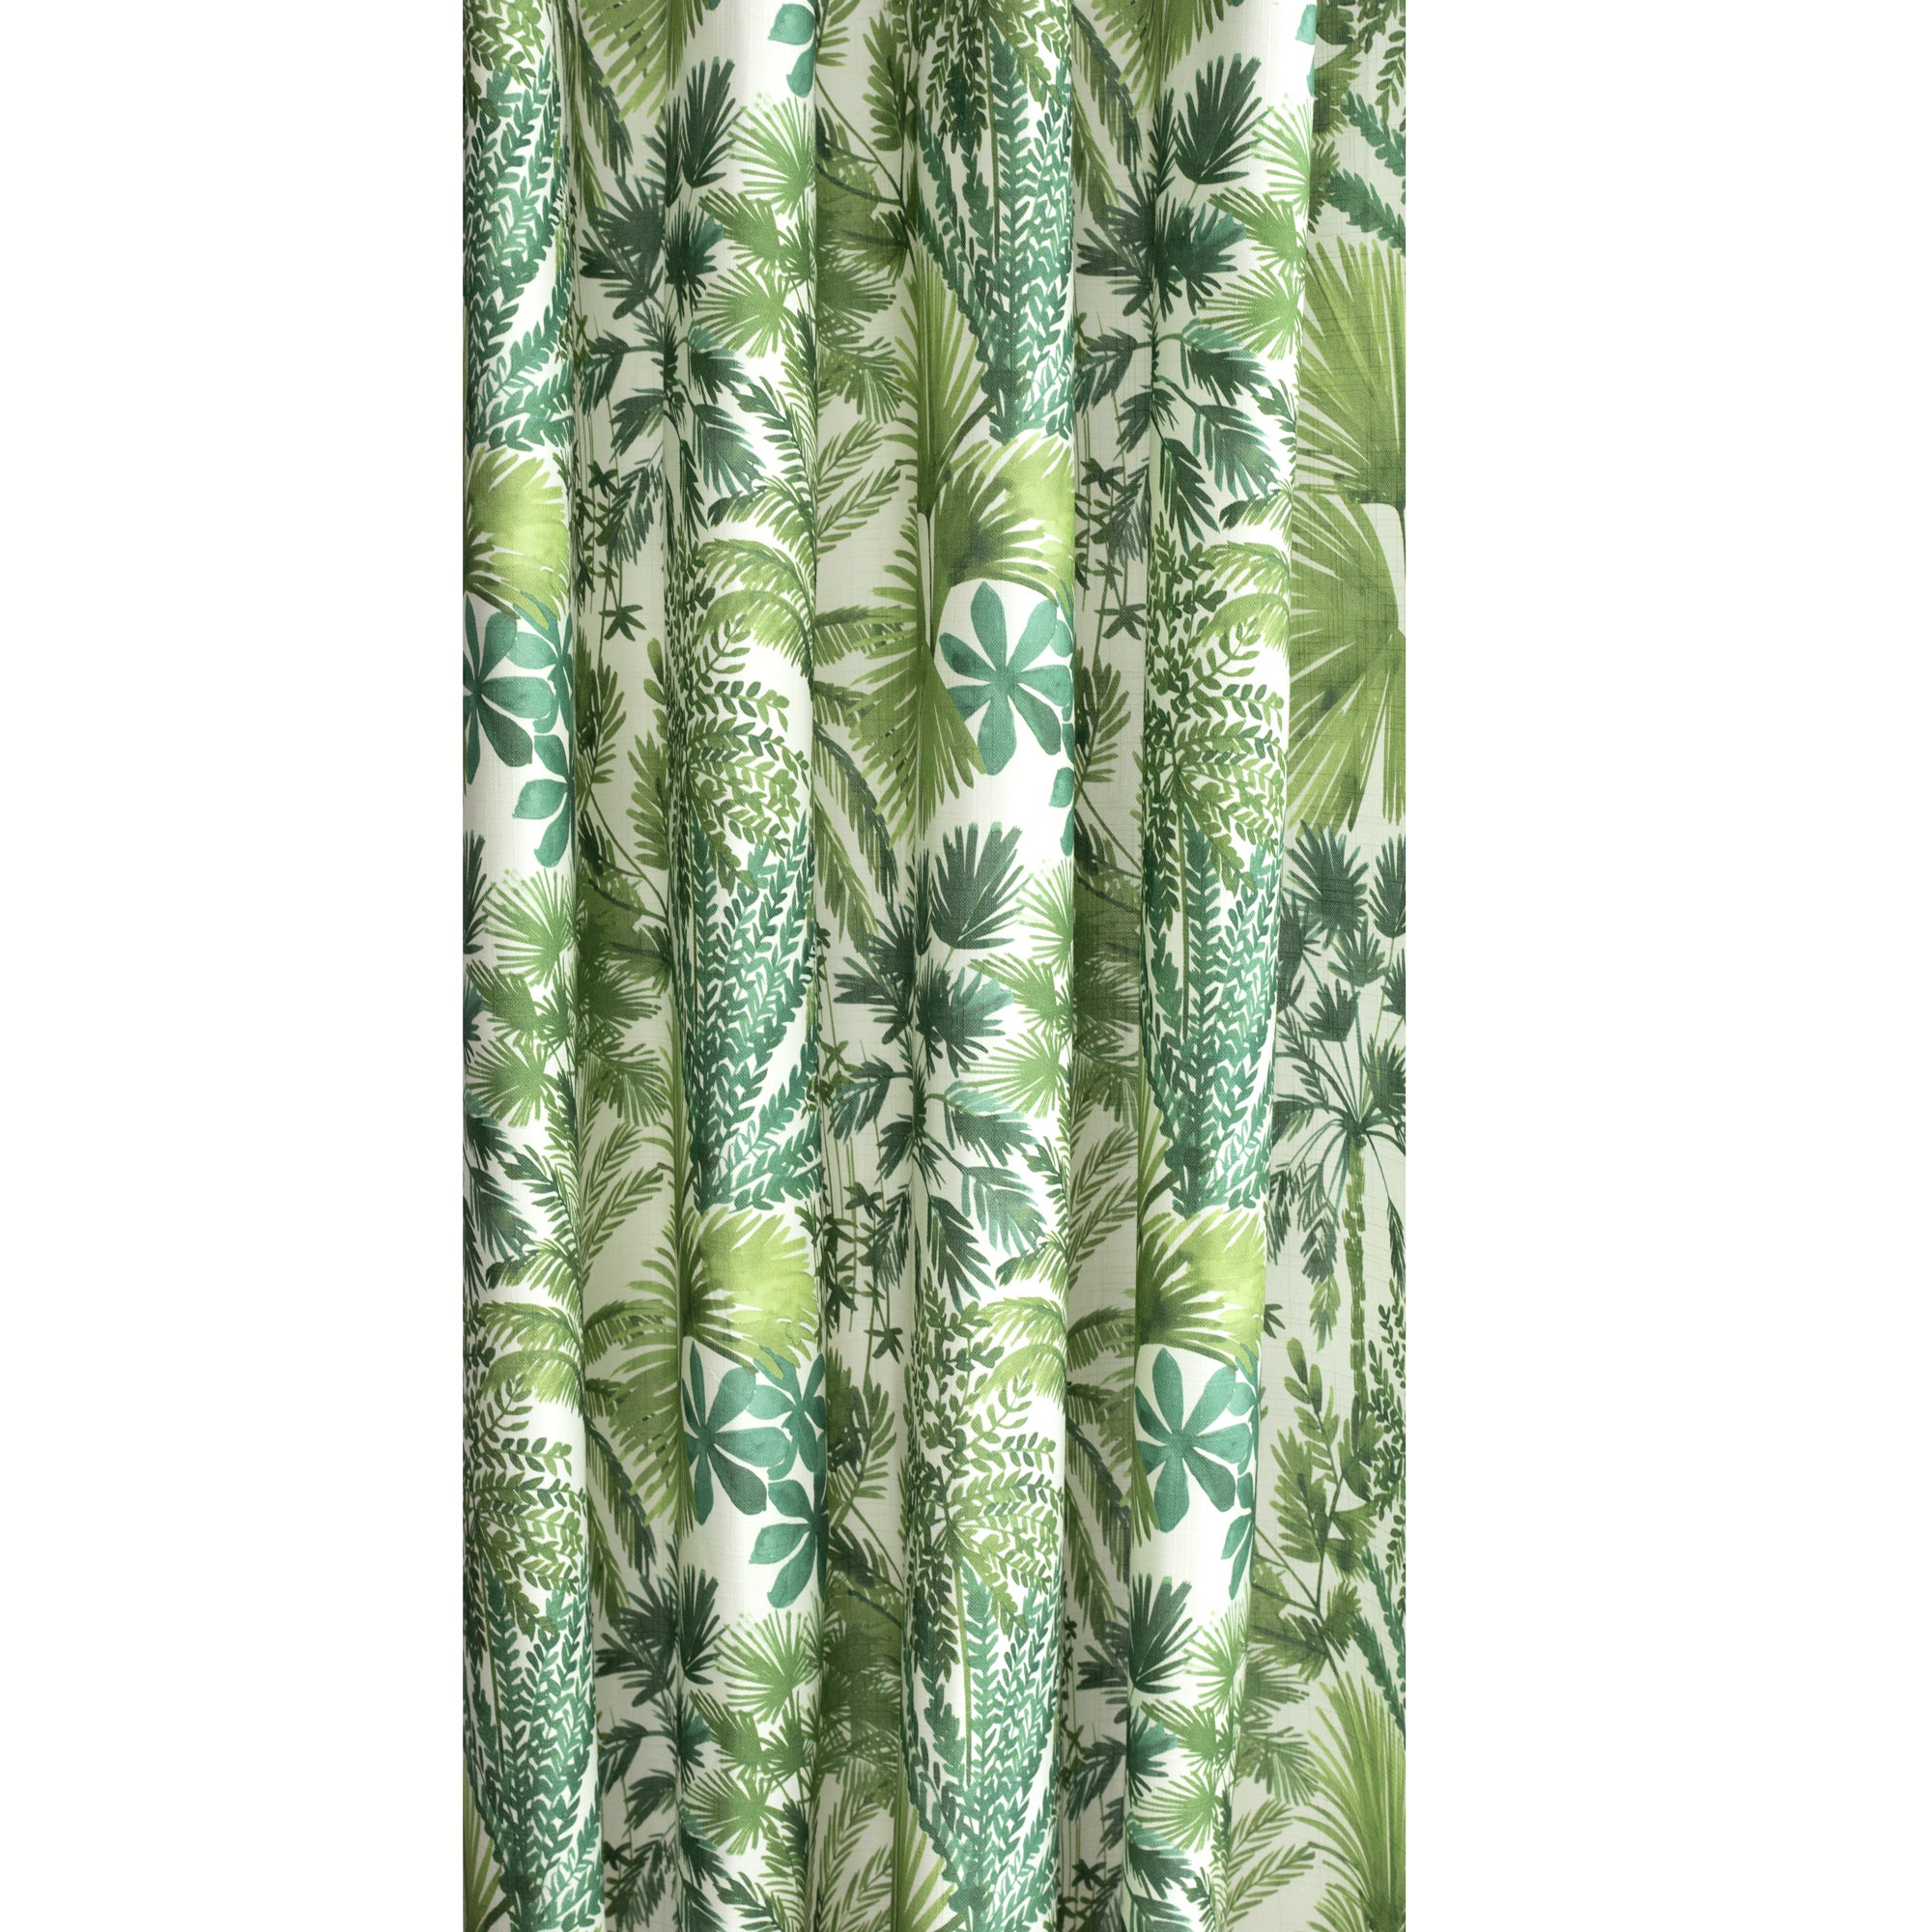 Daintree Palm Green painterly leafy print cotton fabric : drapery curtain fabric